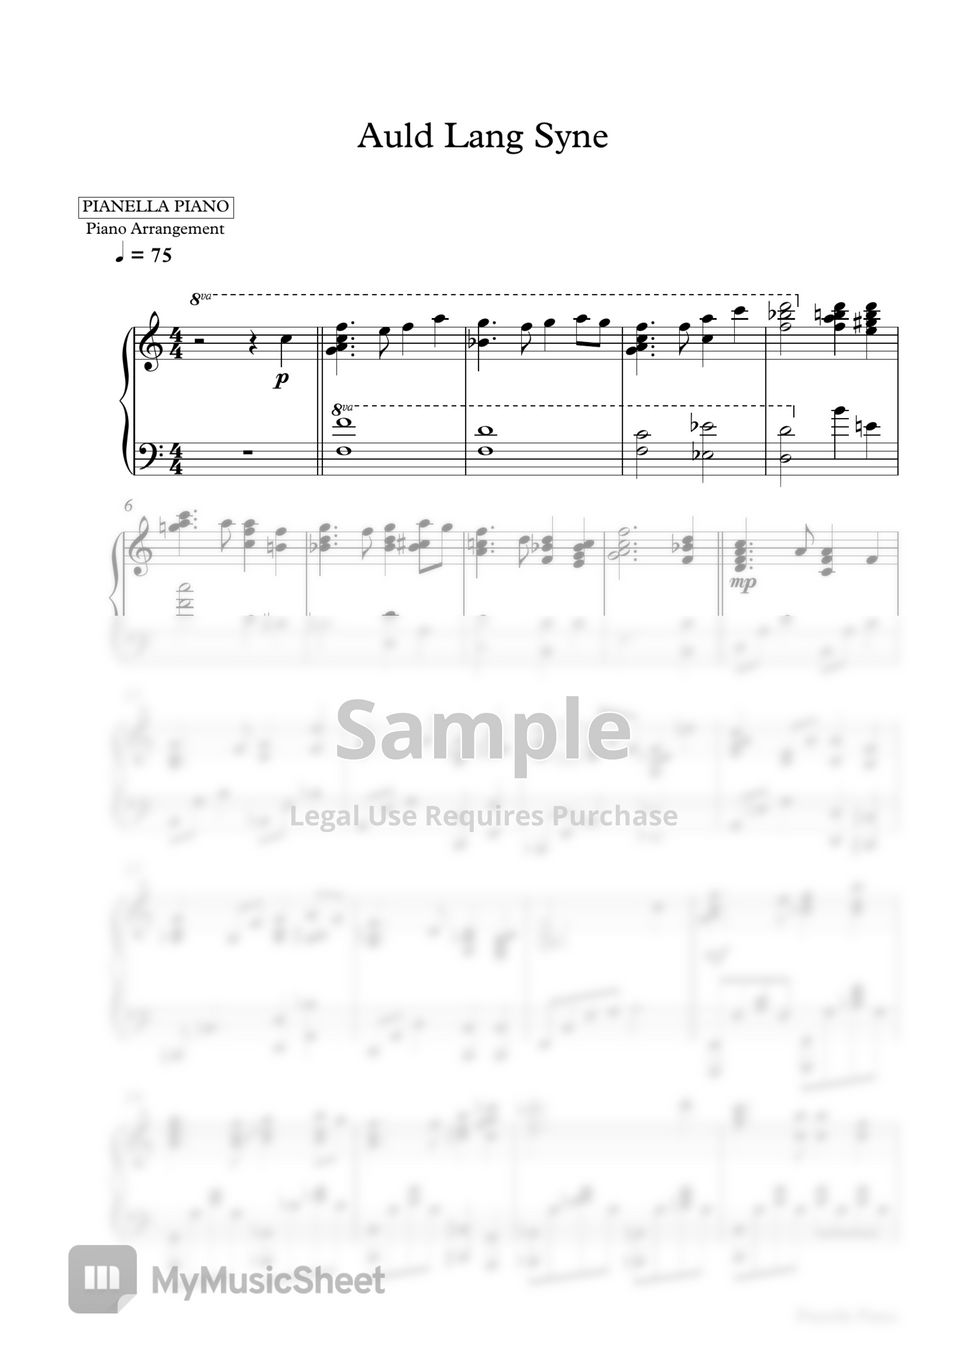 Various Artists - Auld Lang Syne (Piano Sheet) by Pianella Piano